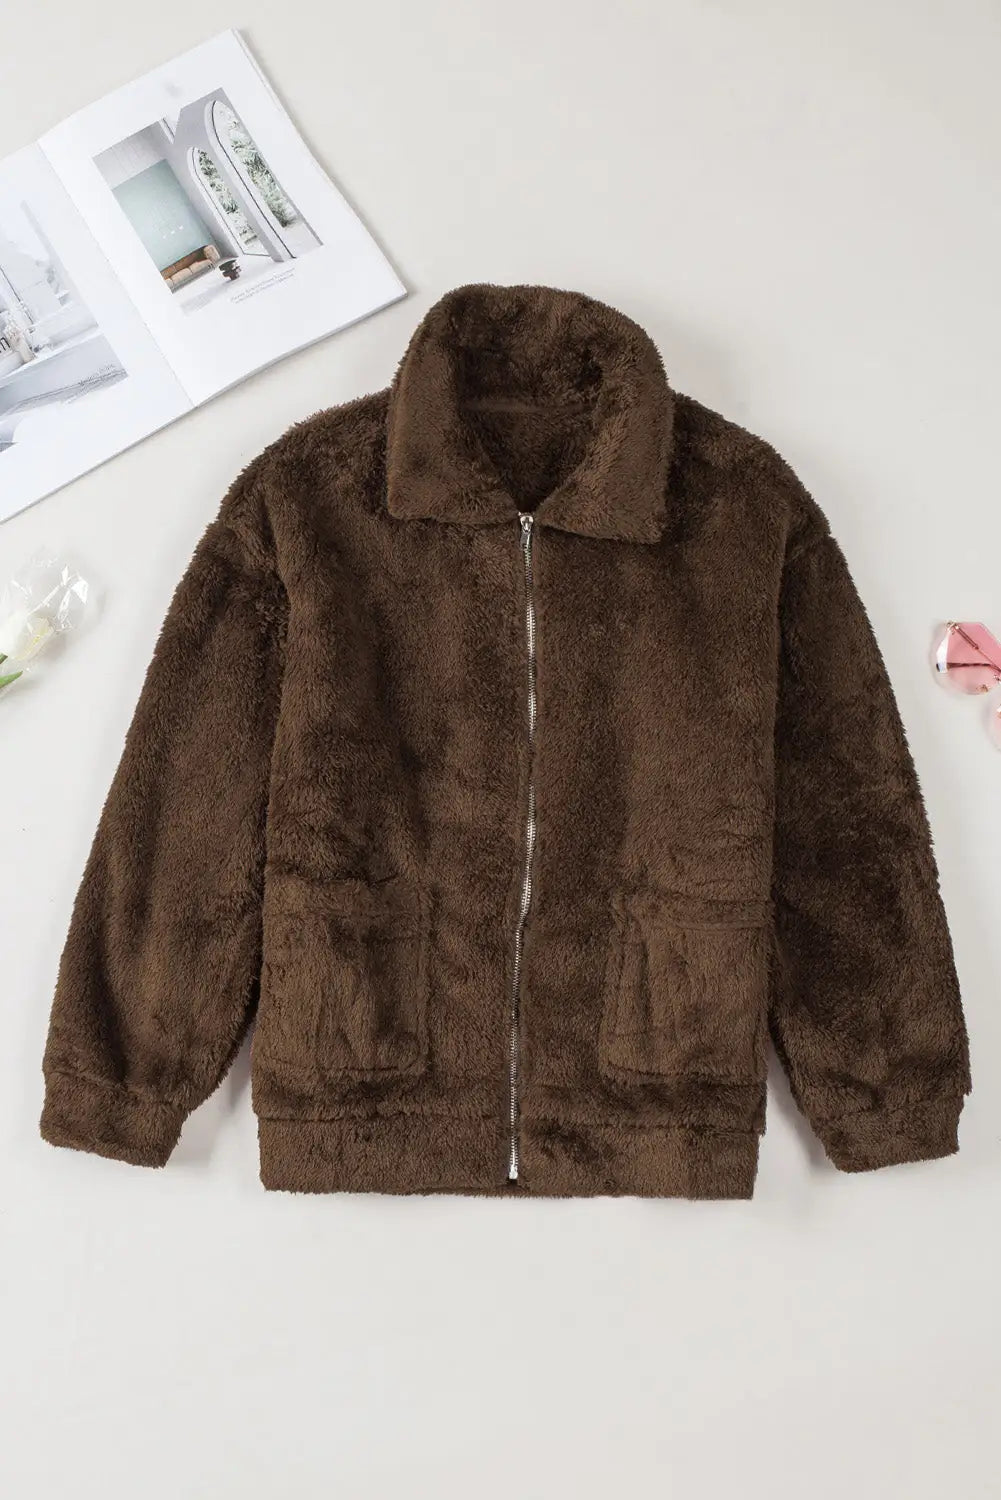 Fleece zipper up casual pocketed coat - coats